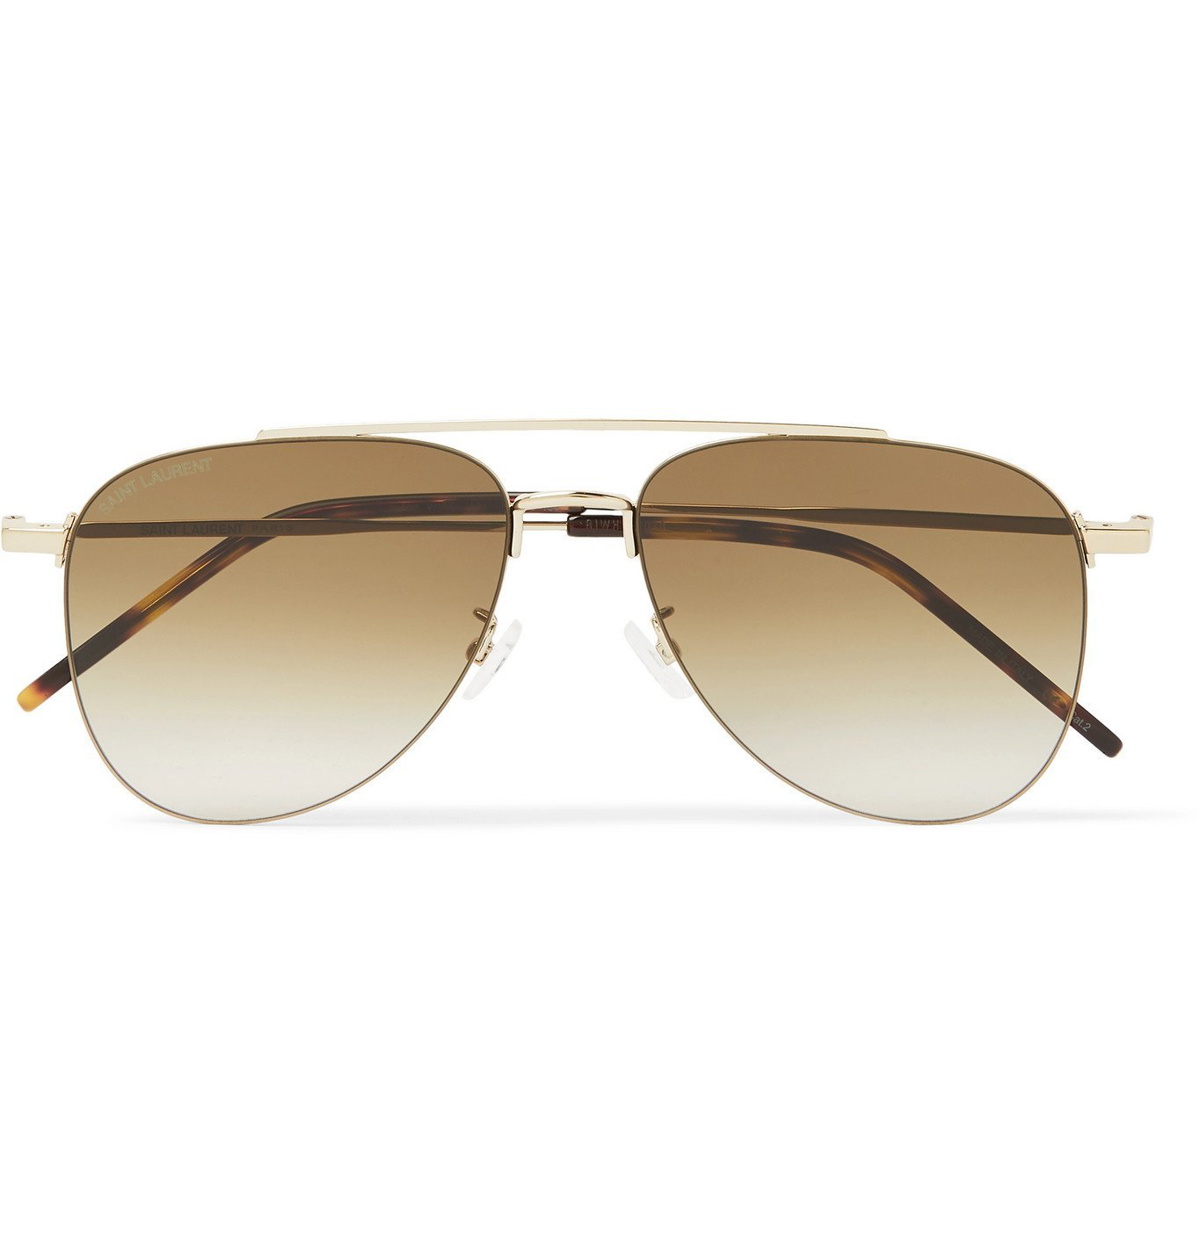 SAINT LAURENT EYEWEAR Aviator-Style Gold-Tone Sunglasses for Men